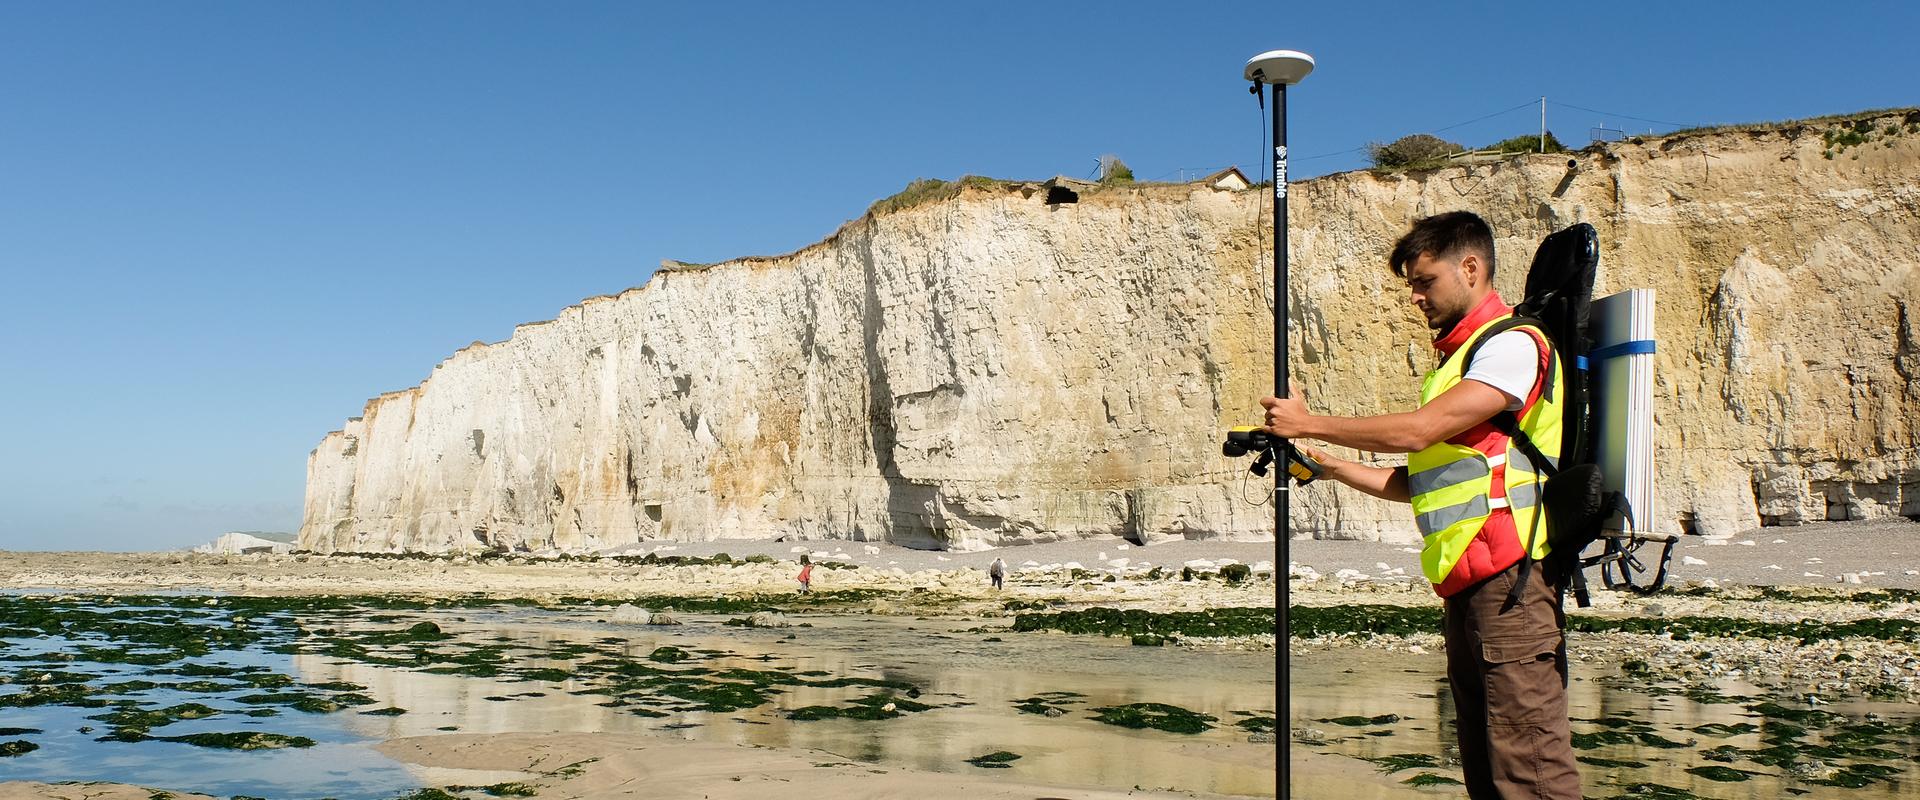 Near-centimetre location of targets for photogrammetry measurements, Seine-Maritime